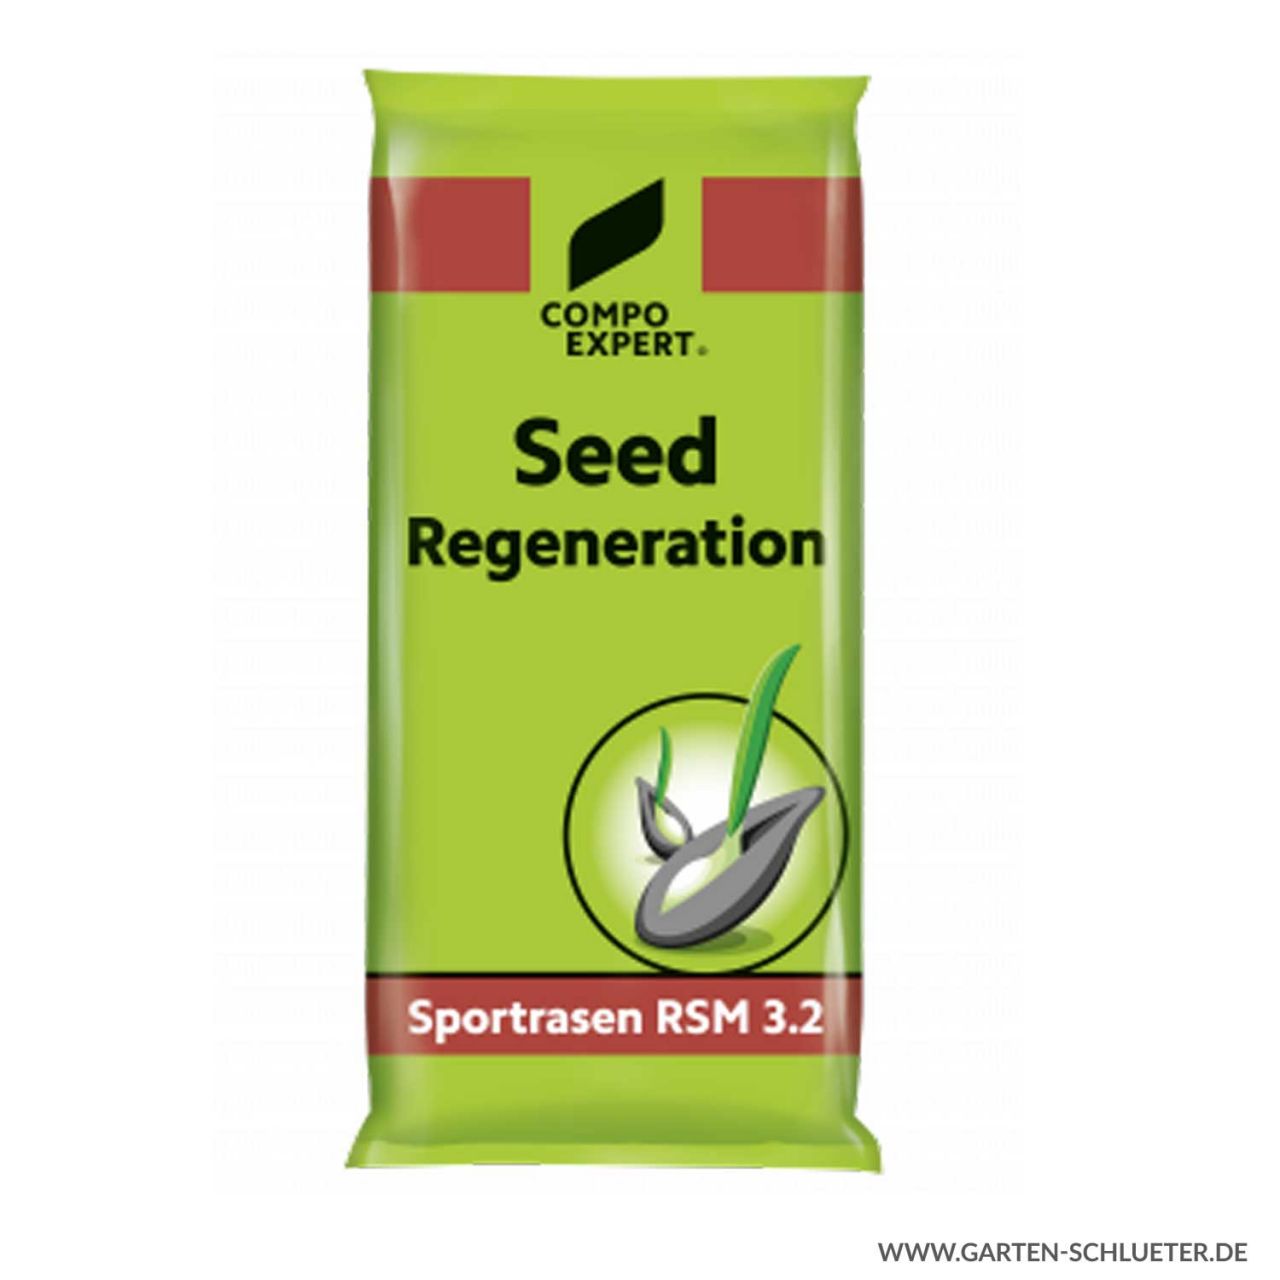 Rasensamen Regeneration – Compo Expert® Seed Regeneration1 RSM 3.2 …